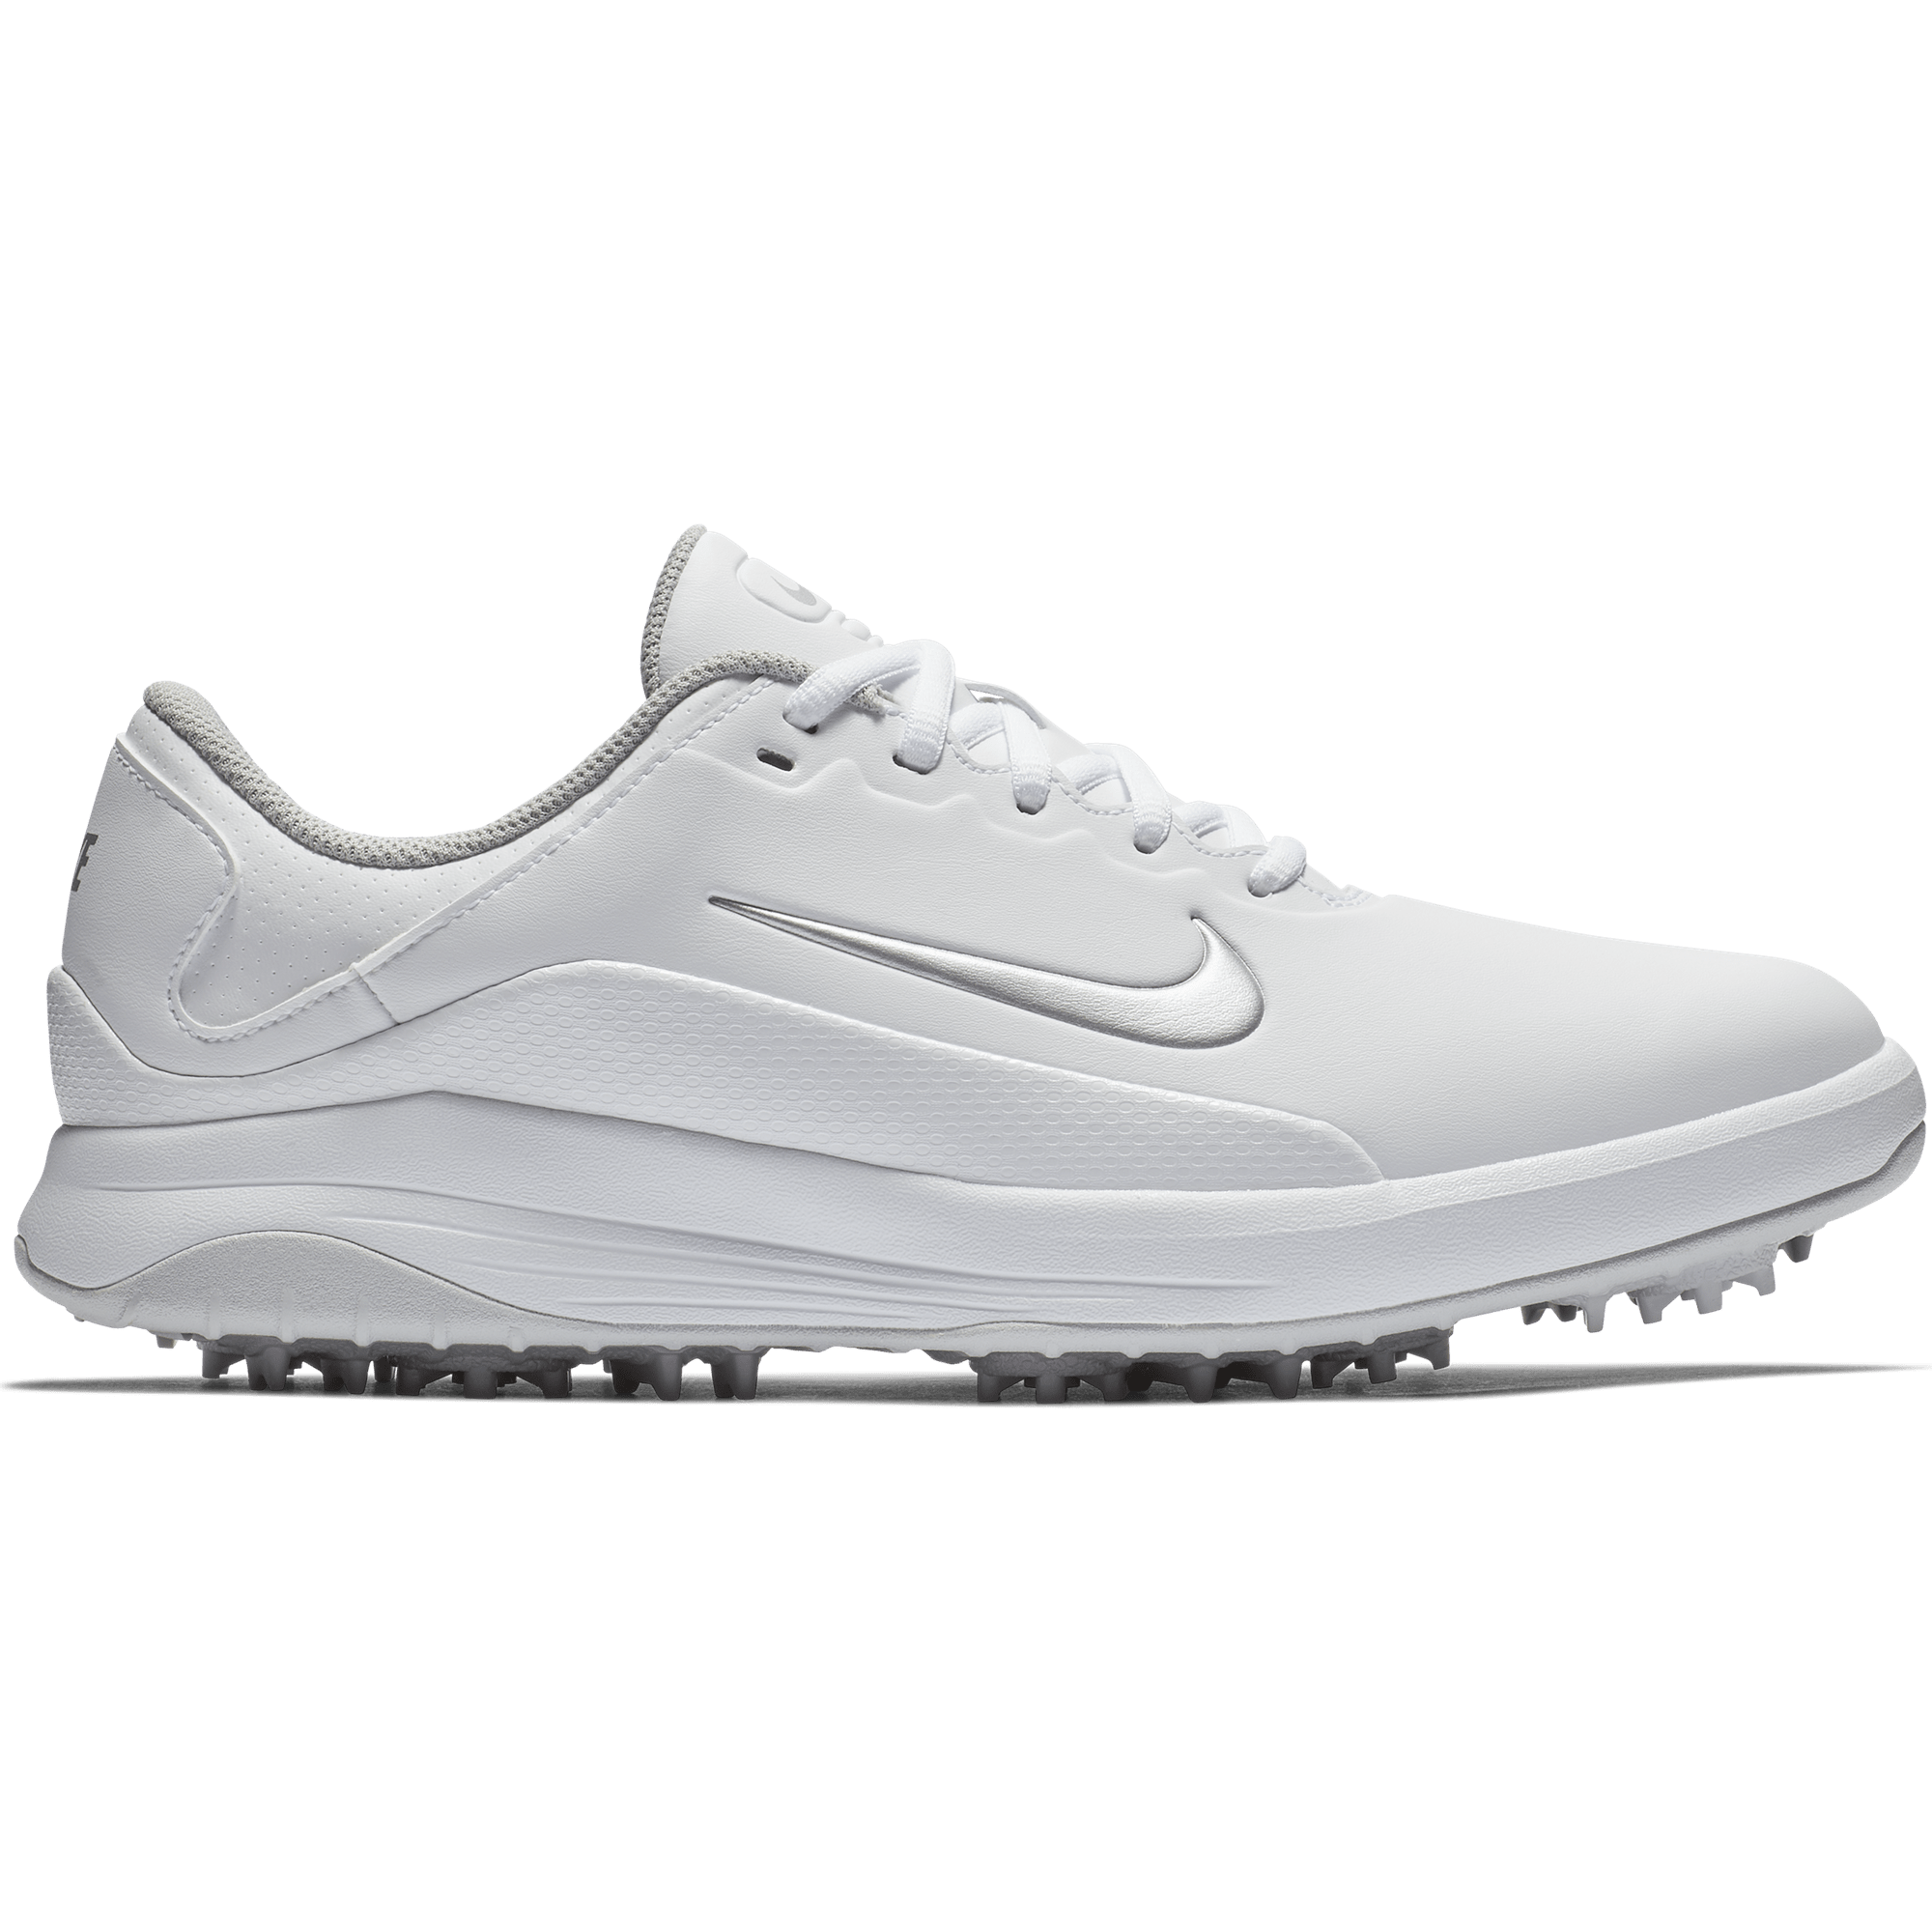 nike vapor pro golf shoes white